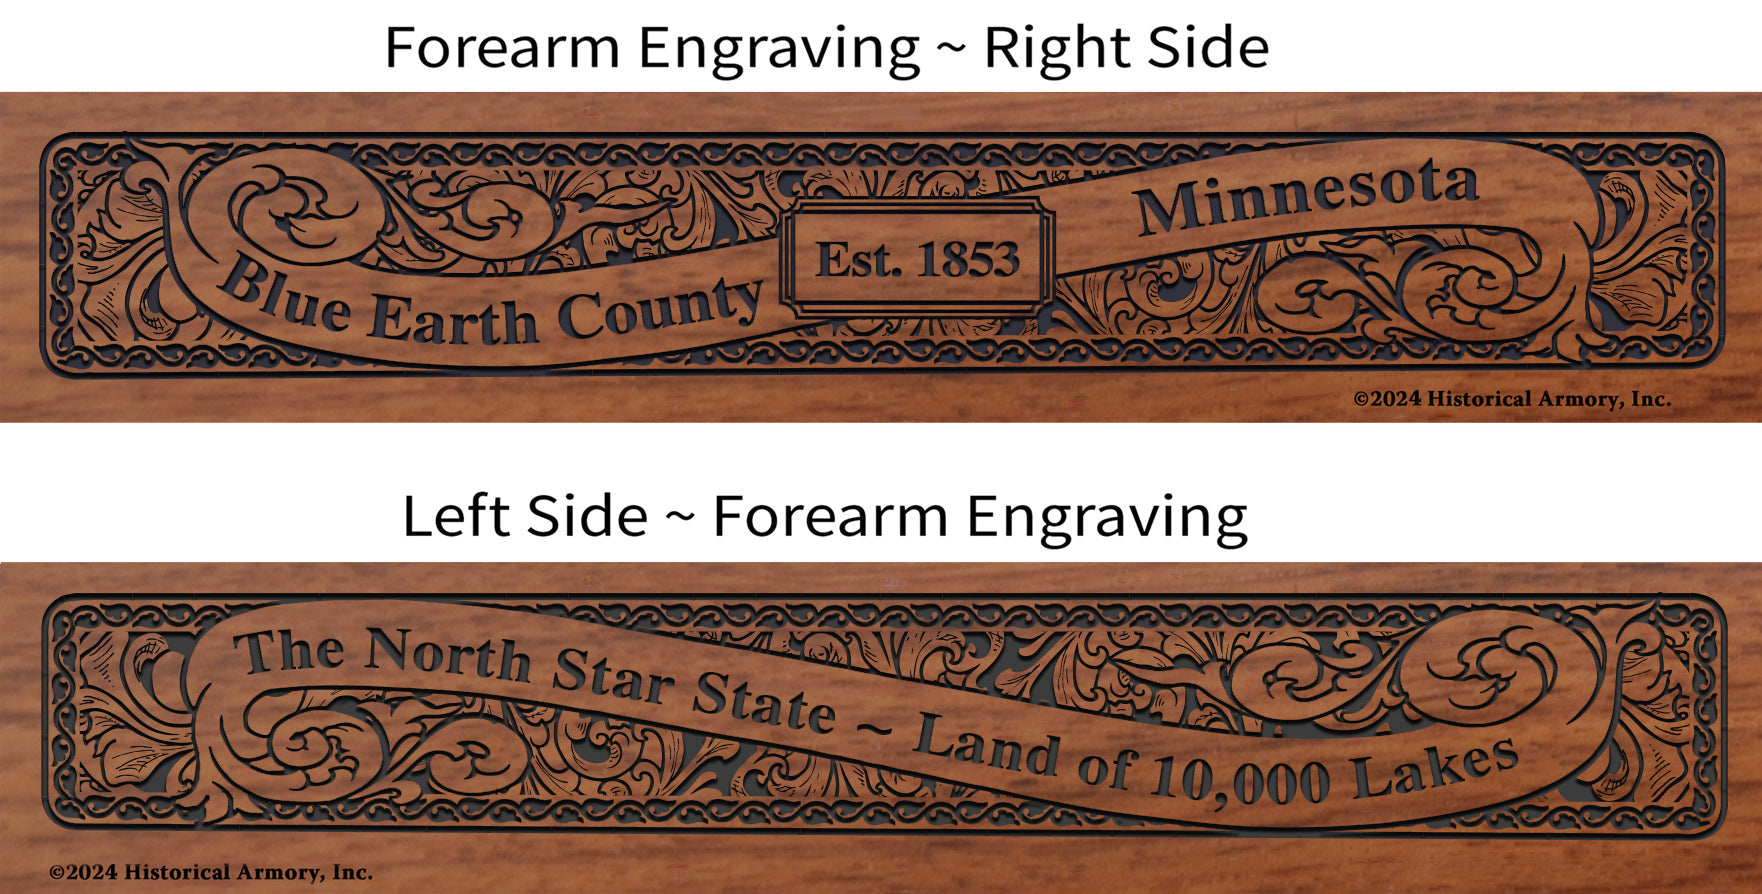 Blue Earth County Minnesota Engraved Rifle Forearm